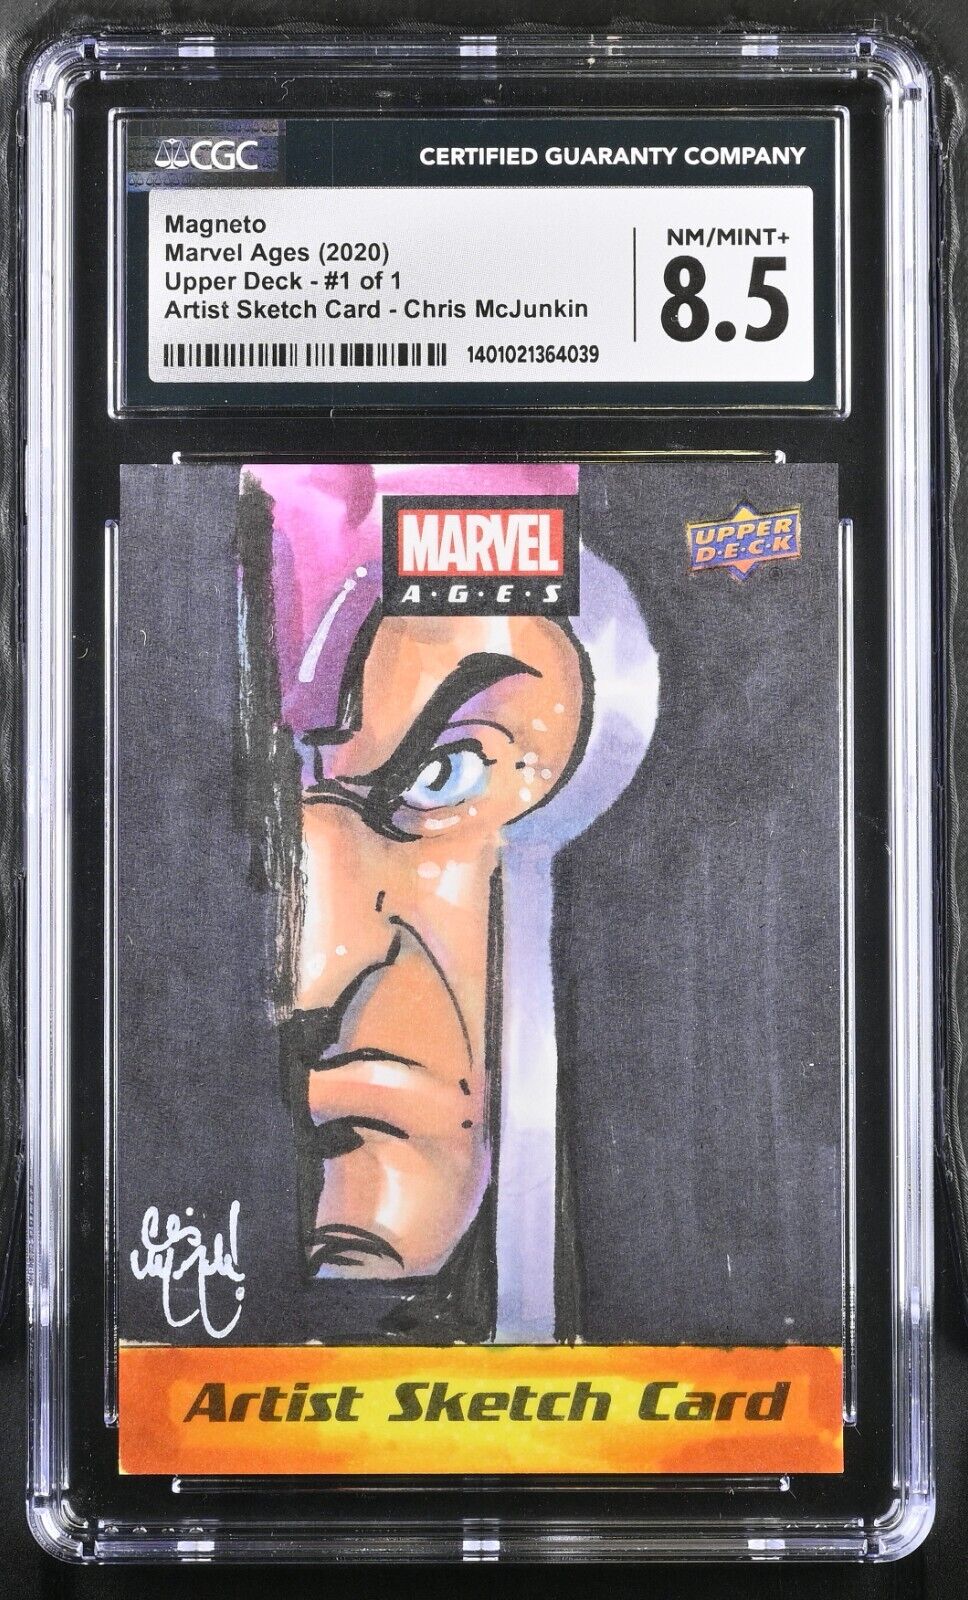 Marvel Sketch Card Artist Proof 1/1 - Magneto - Chris McJunkin - CGC 8.5